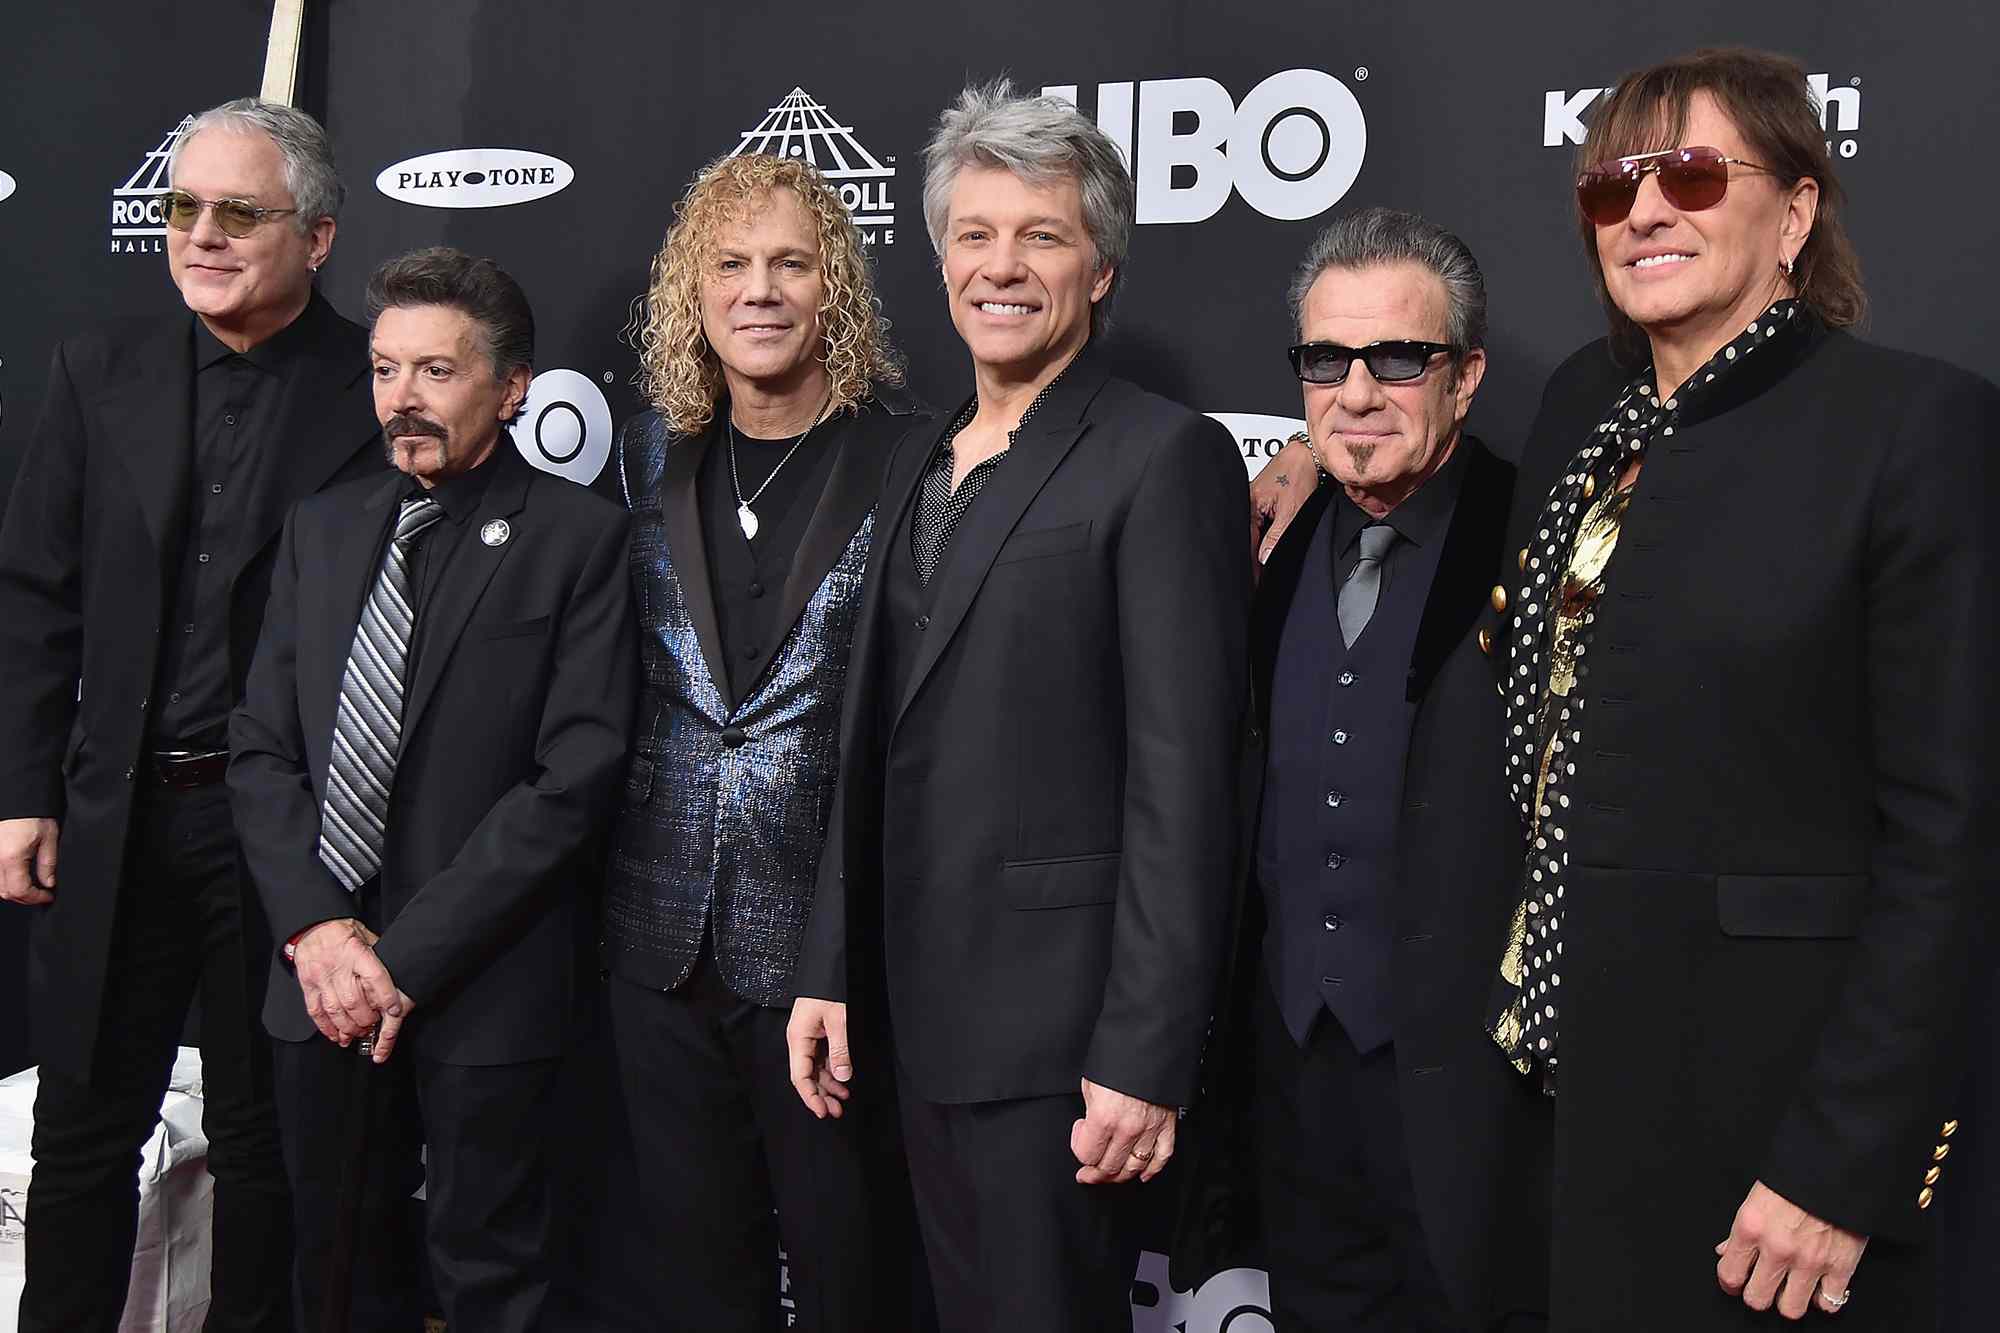 Hugh McDonald, Alec John Such, David Bryan, John Bon Jovi, Tico Torres and Richie Sambora of Bon Jovi attend the 33rd Annual Rock & Roll Hall of Fame Induction Ceremony on April 14, 2018 in Cleveland, Ohio.